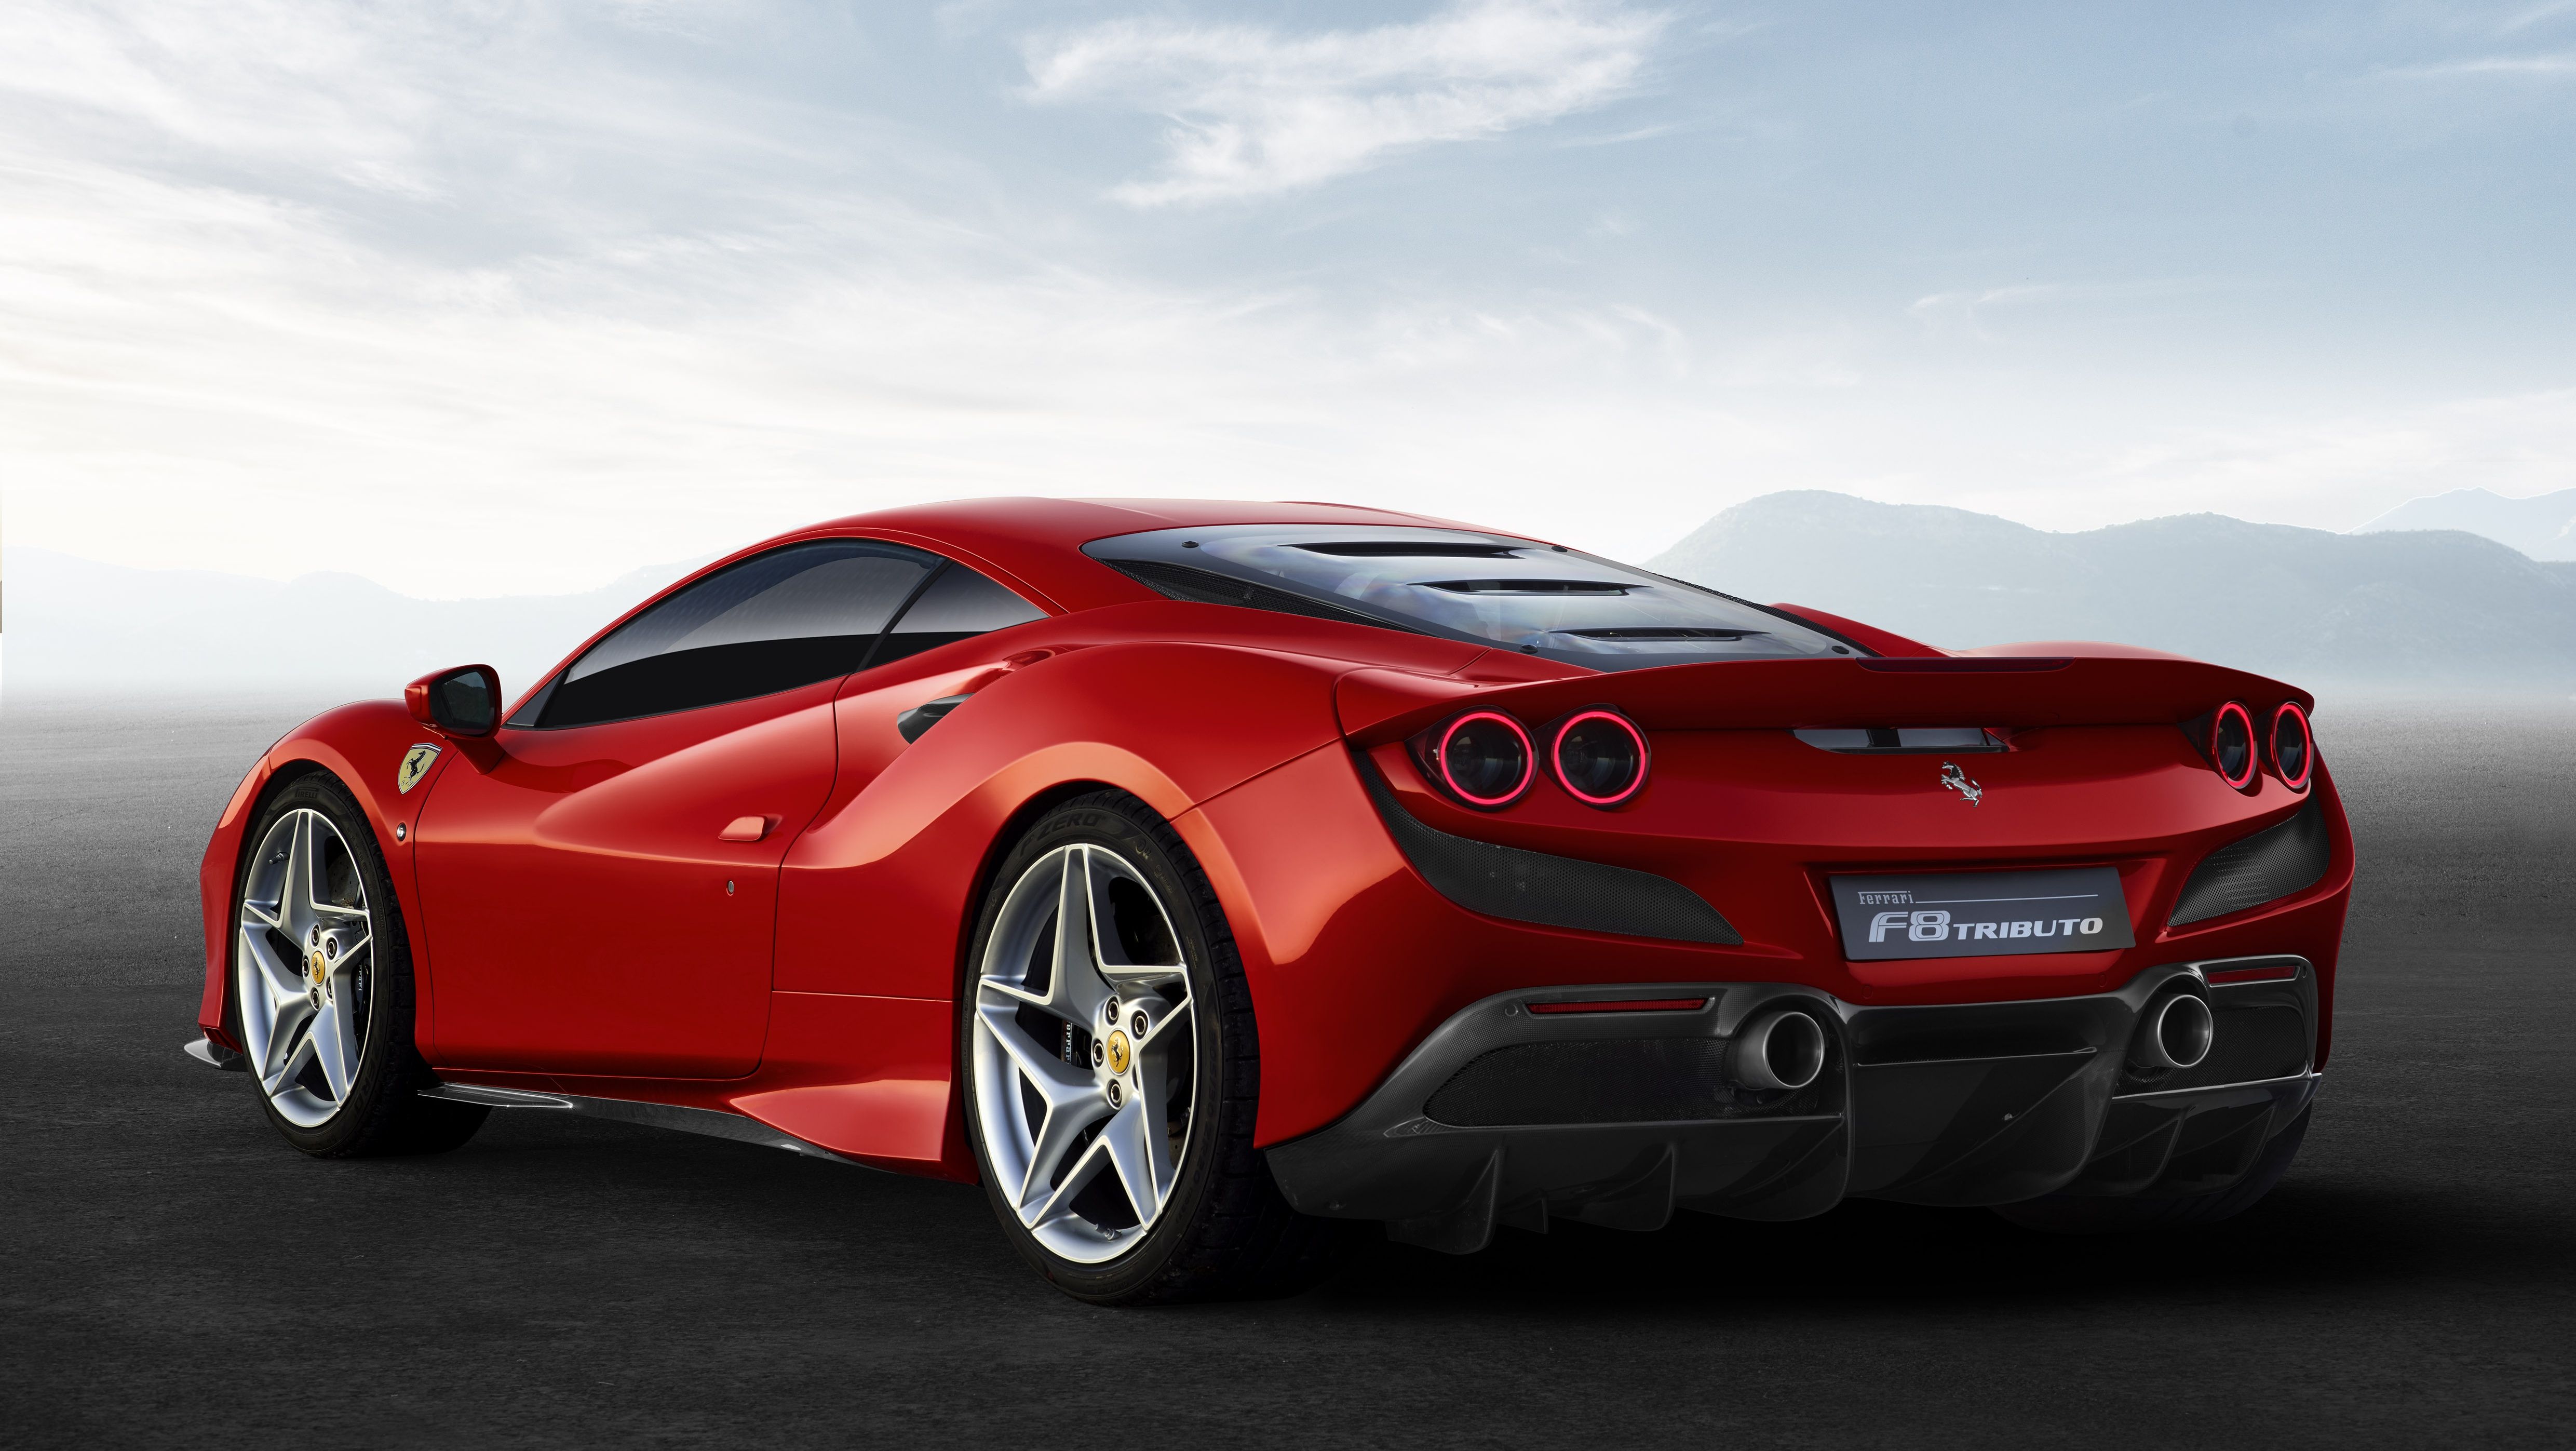 Ferrari F8 Tributo Review and Specs